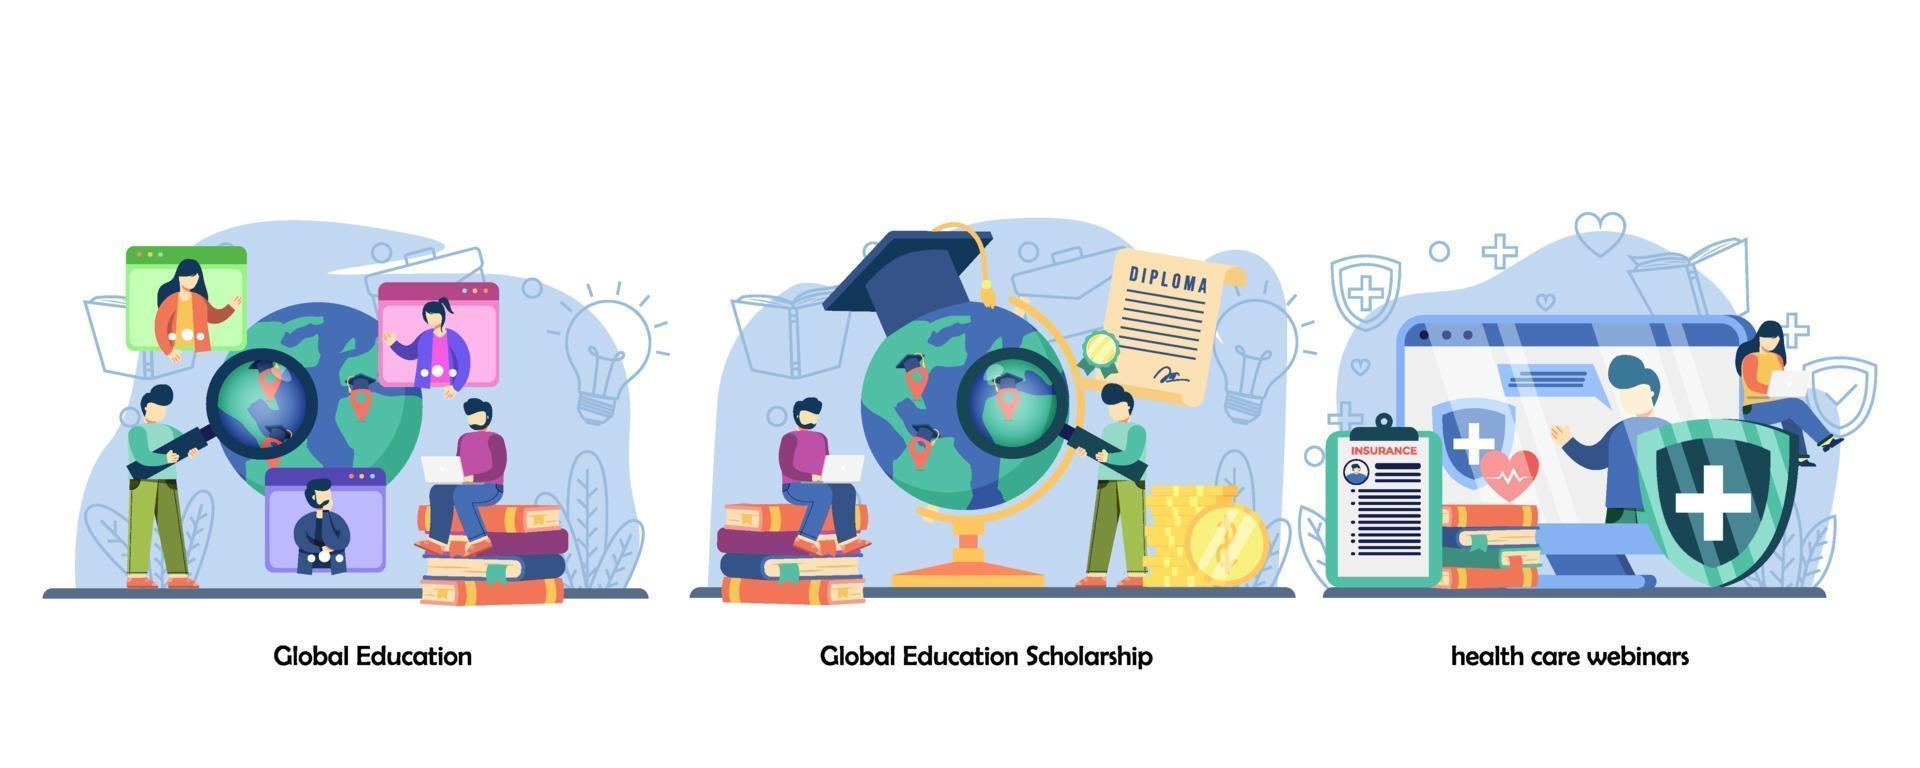 Global Education, Scholarship, Health care webinars.online education, online training icons set. Vector flat design isolated concept metaphor illustrations